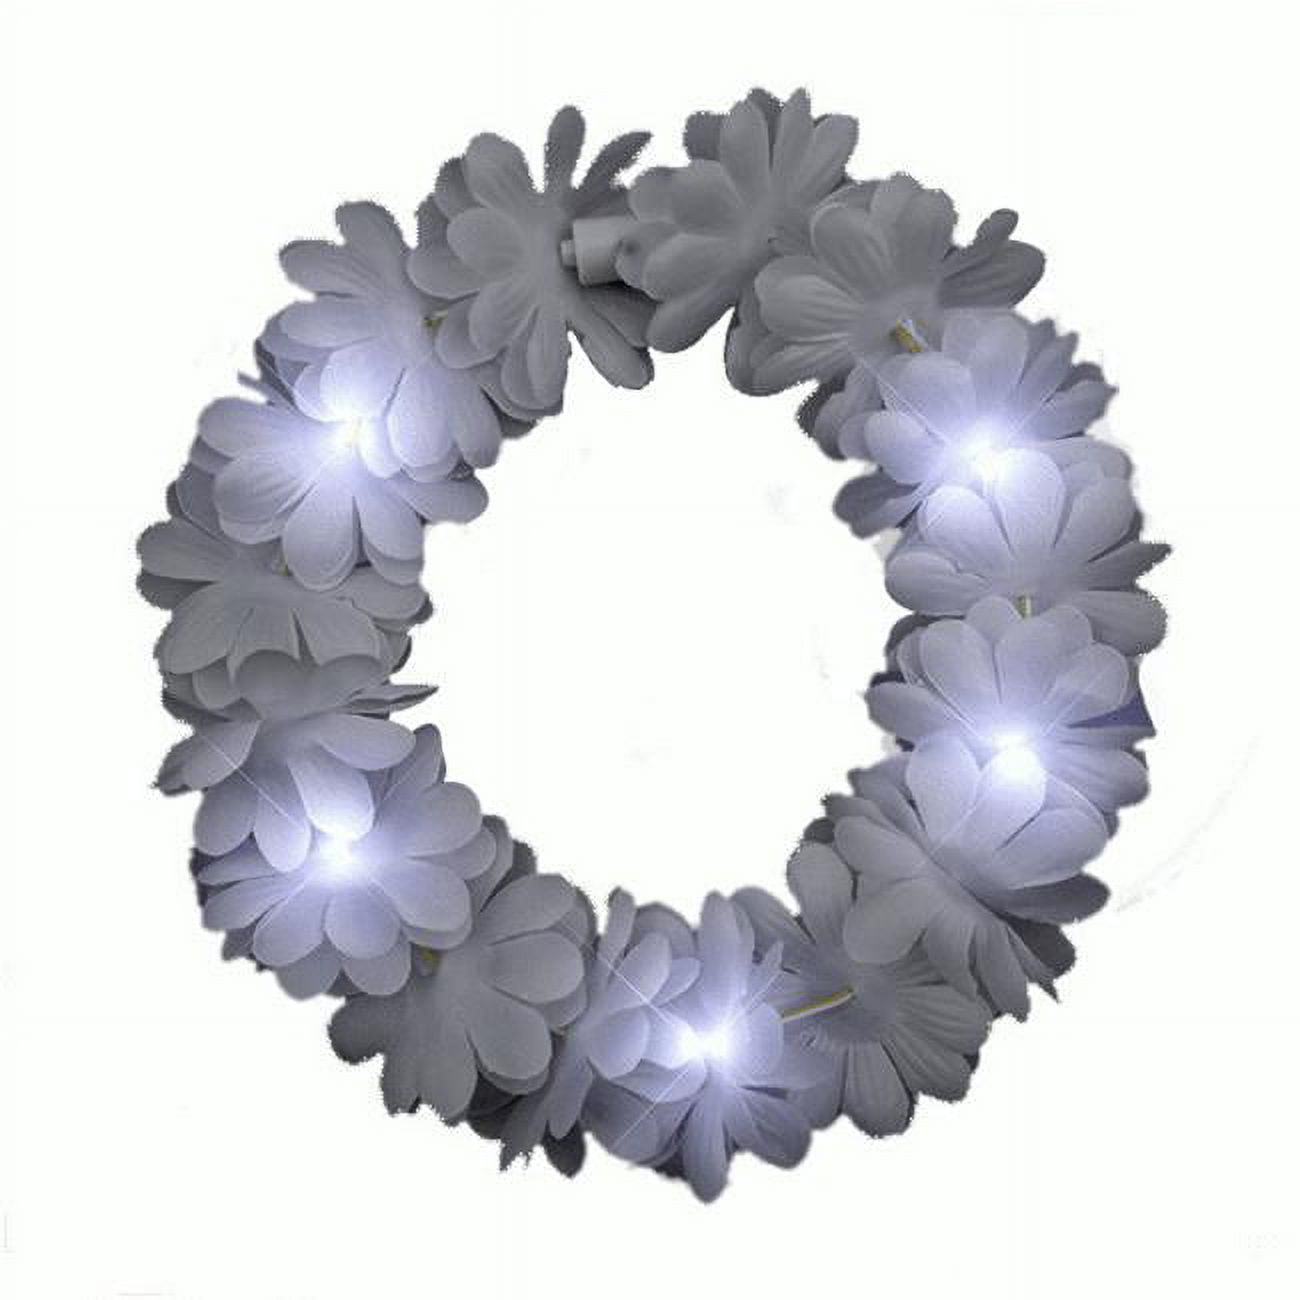 Picture of Blinkee A1350 Light Up Flashing Wedding White Flower Princess Angel Halo Crown Headband